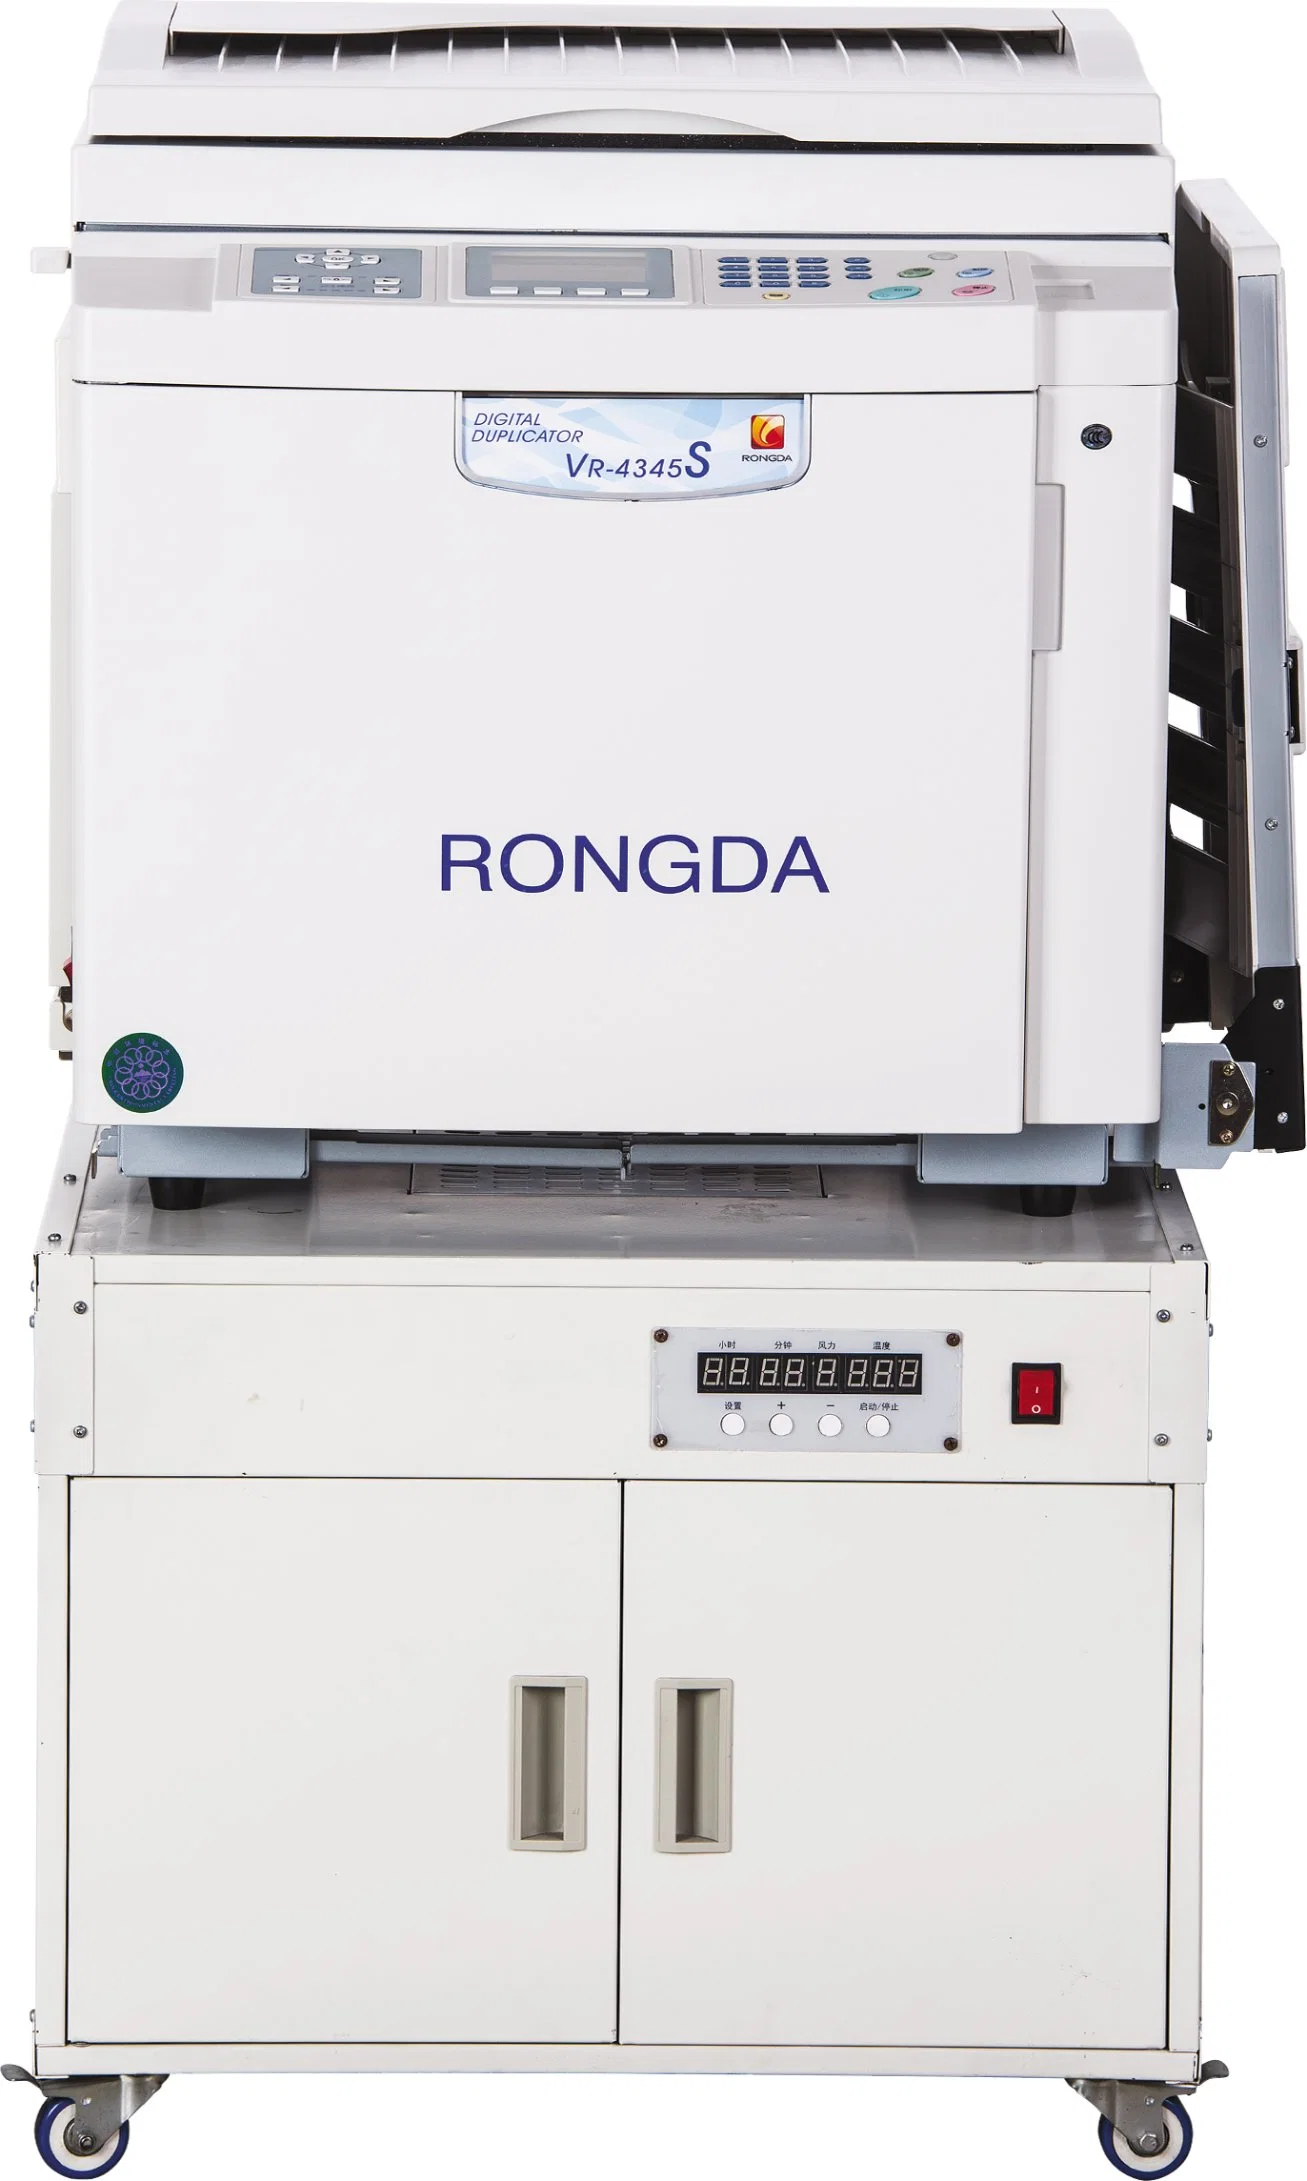 Rongda Vr-4345s A3b4 Full Automatic Stencil Pringting Machine